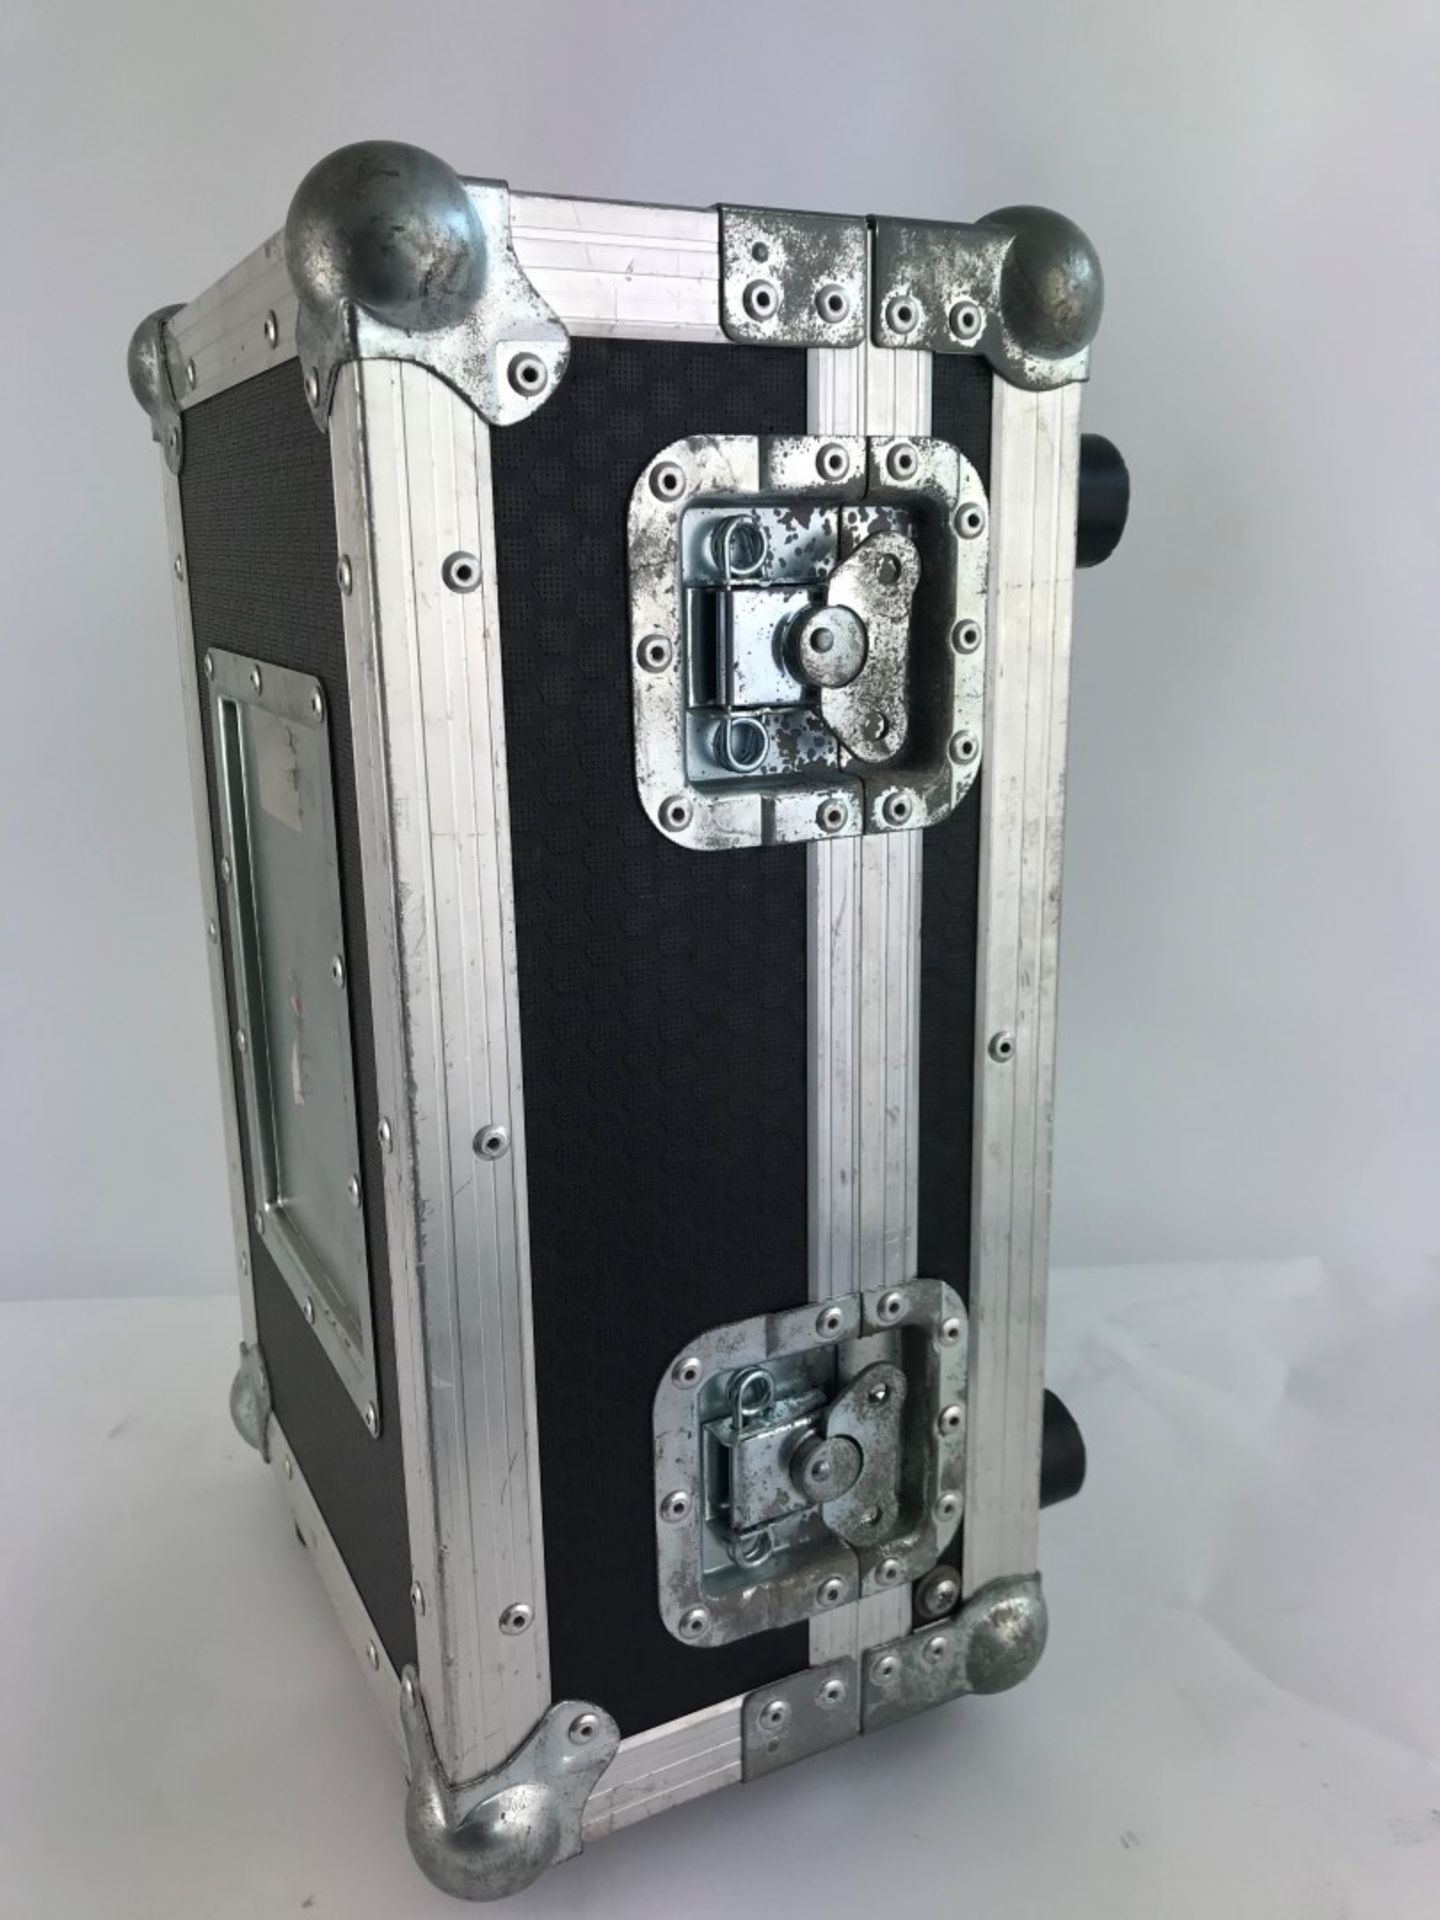 1 x Roland V4 EX Vision Mixer In Flight Case - Ref: 118 - CL581 - Location: Altrincham WA14 - Image 3 of 3